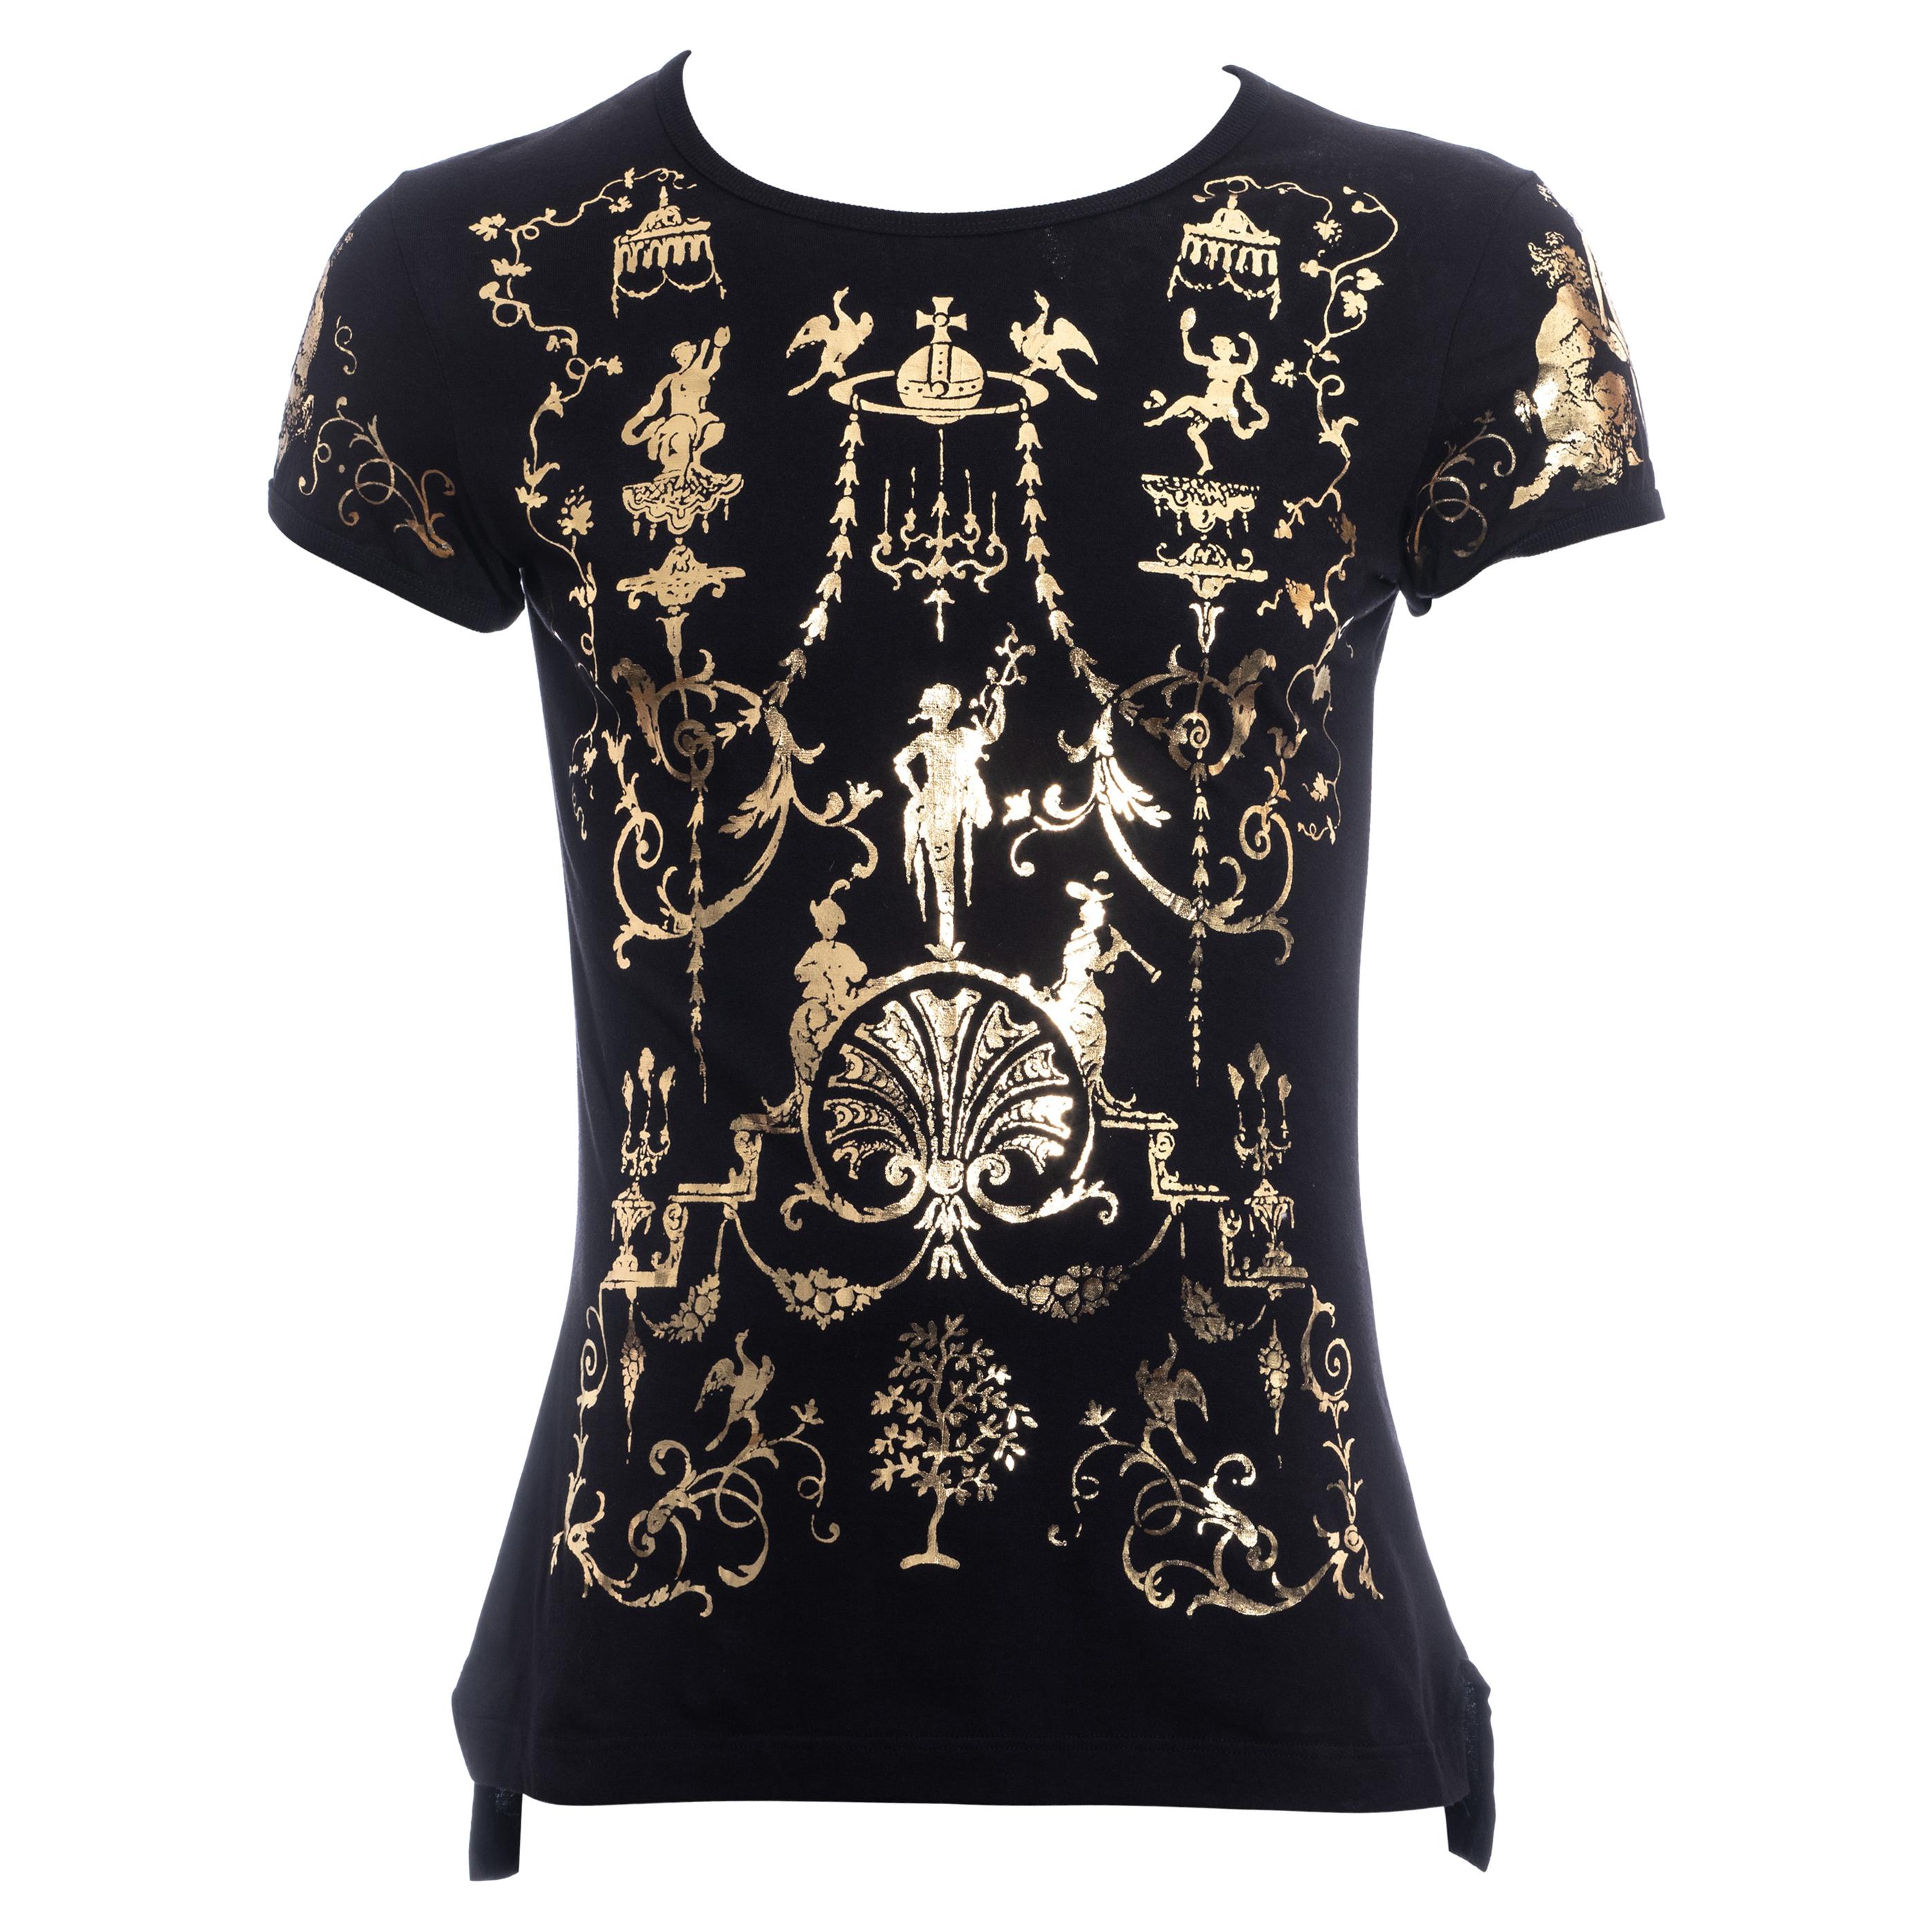 Men's Vivienne Westwood black cotton t-shirt with metallic gold 